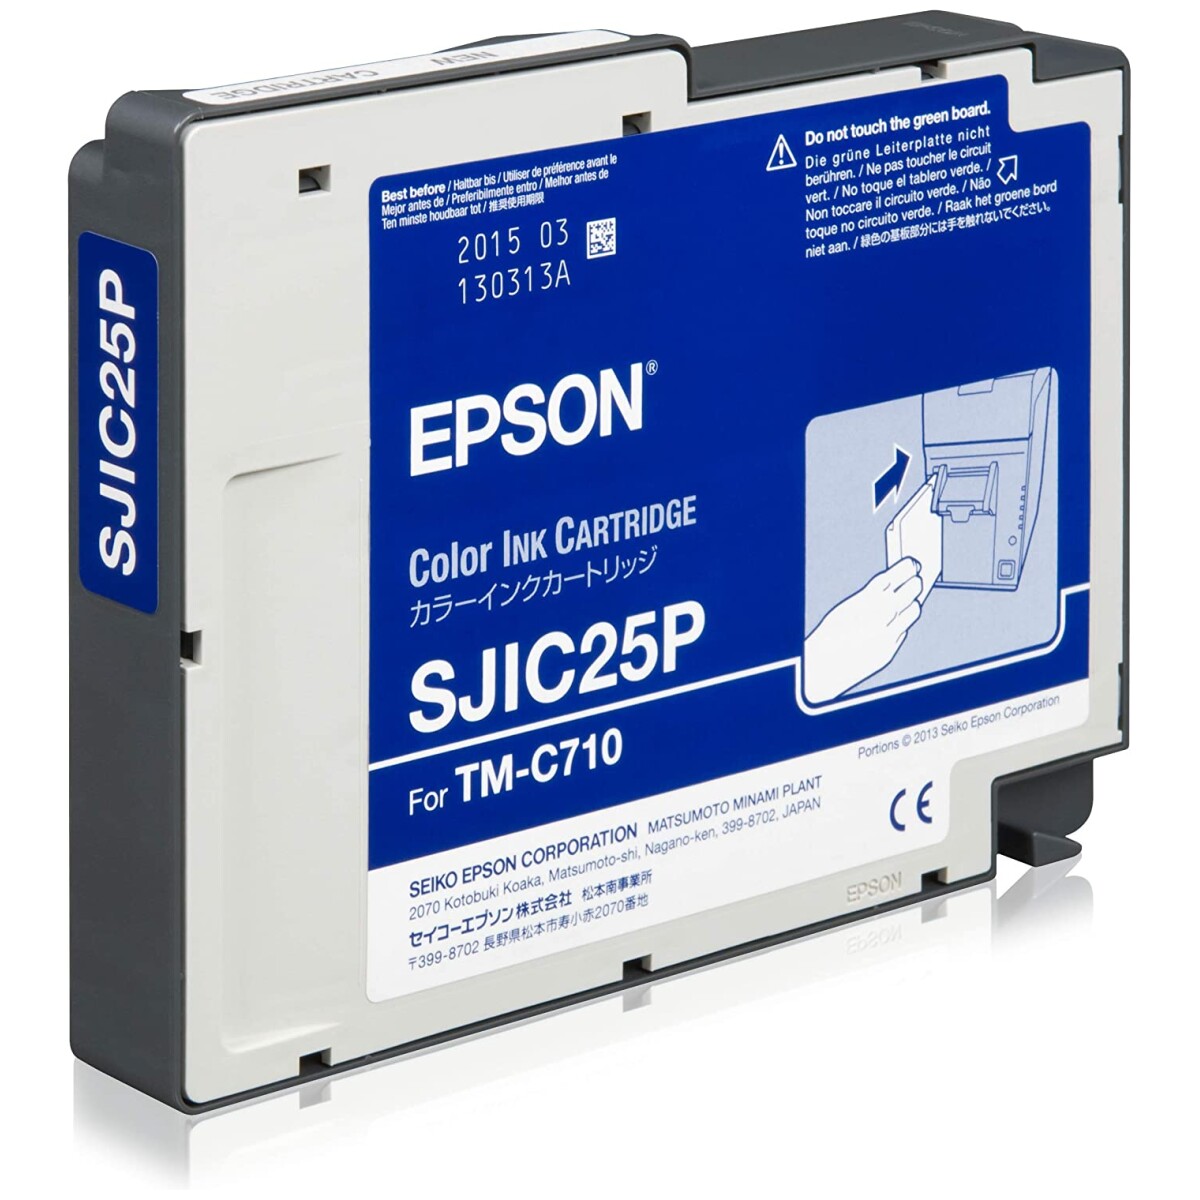 Epson – Printcartridge TM-c710 - SJIC25P